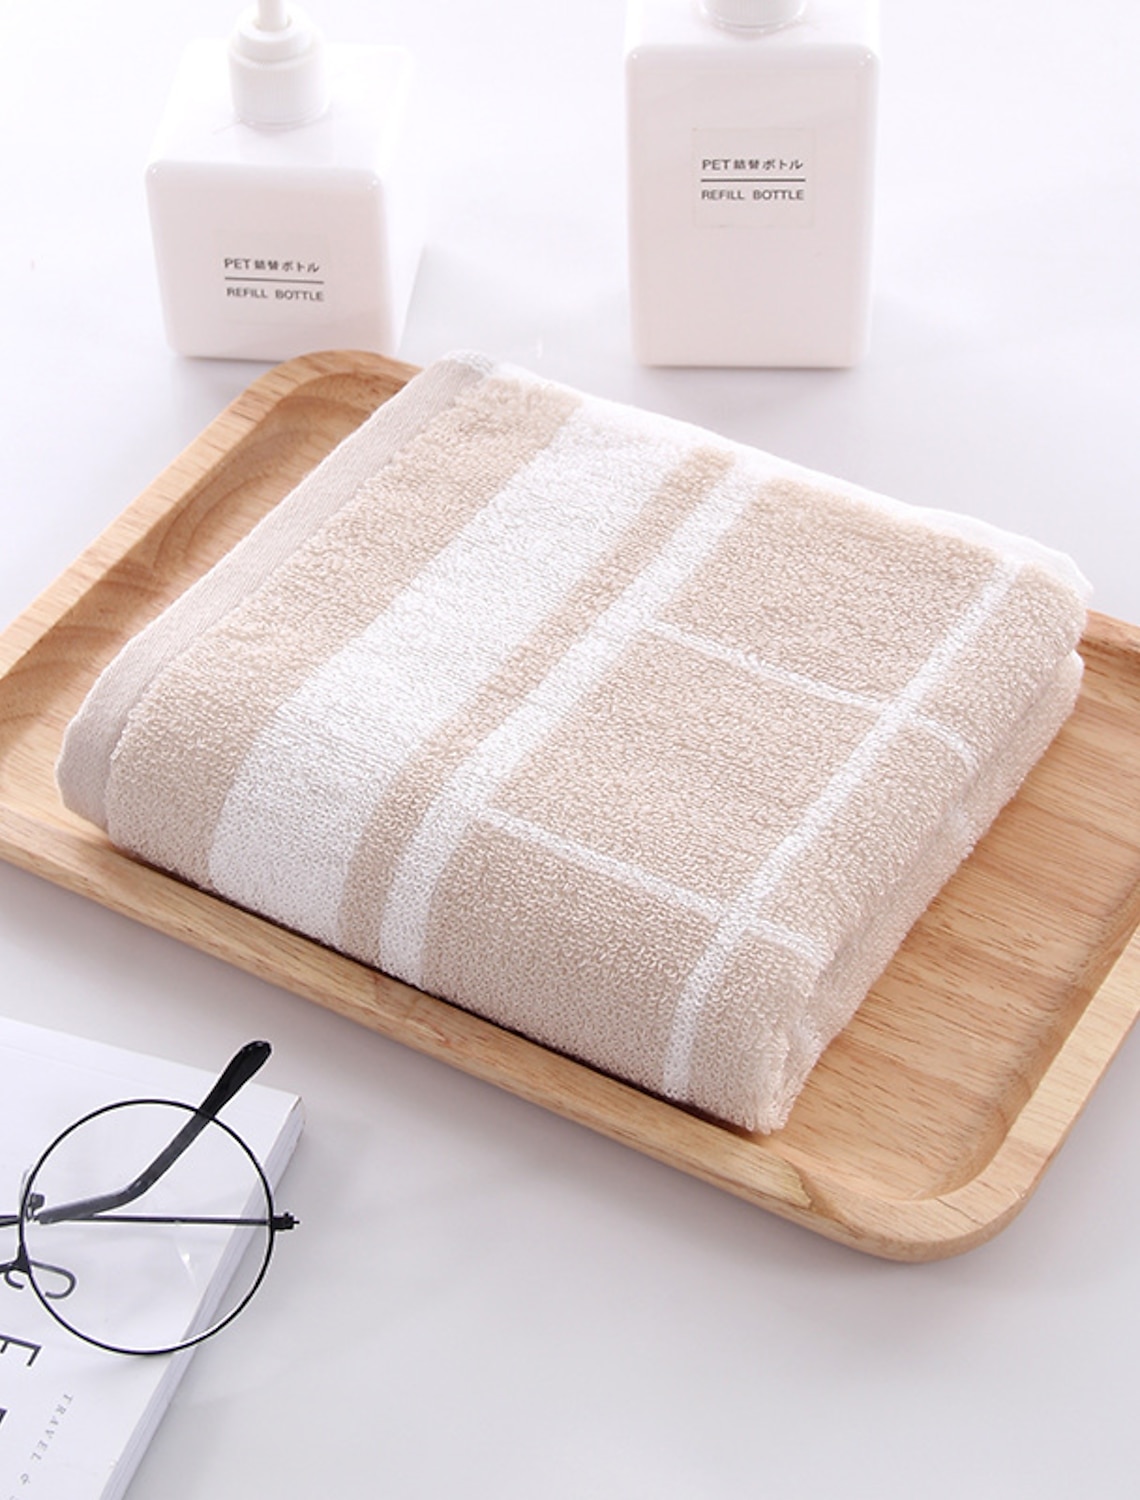 Super Soft Coral Fleece Face Hand Towels Bath Shower Towel Home Travel 34 x 75cm 